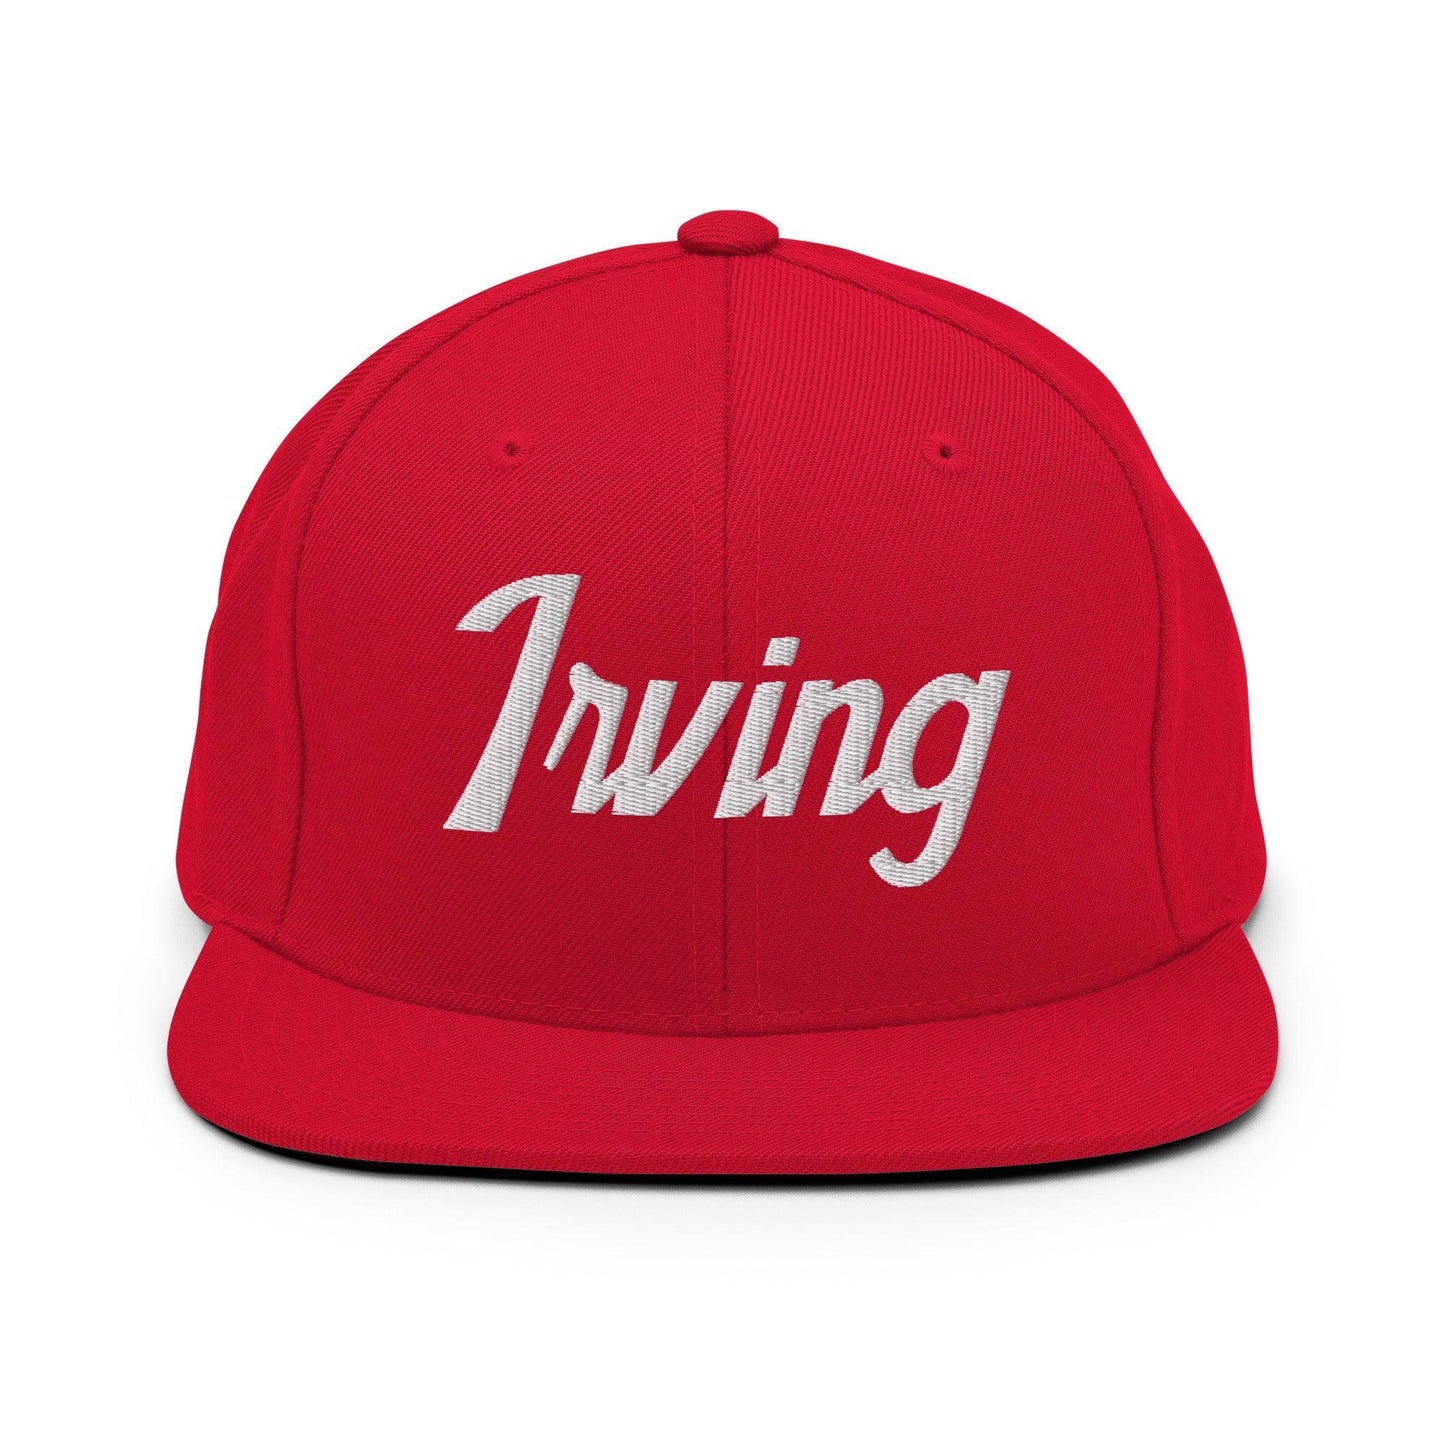 Irving Script Snapback Hat Red